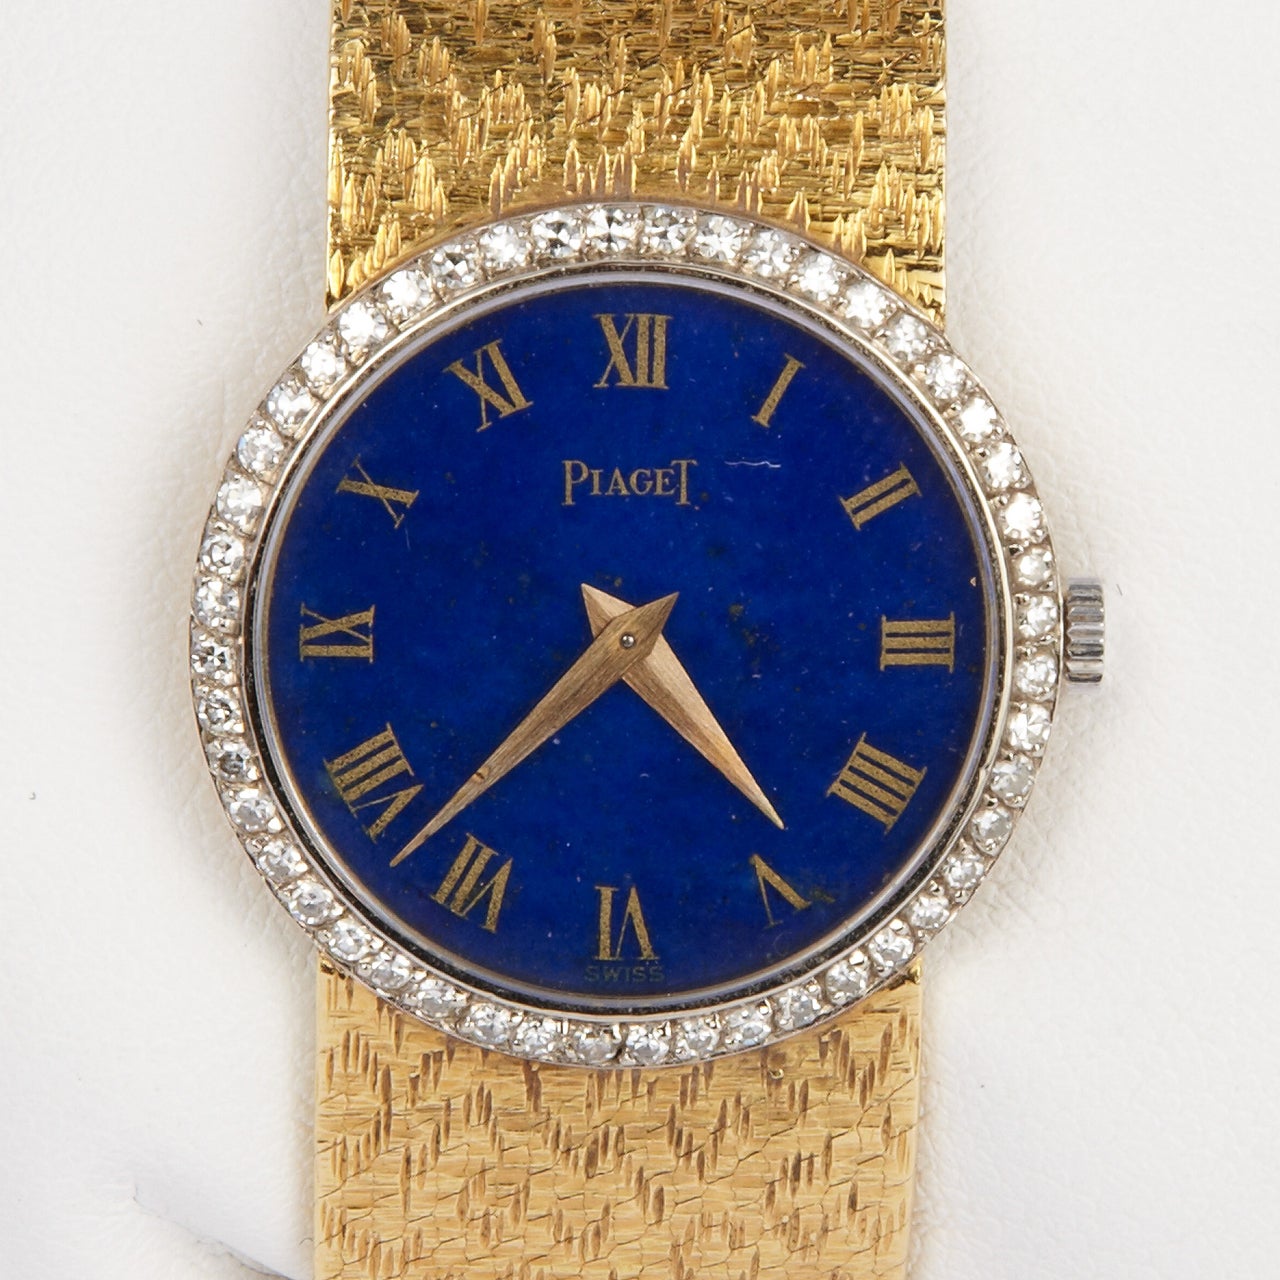 Piaget lady's bracelet watch. 18k yellow gold and diamonds with lapis lazuli dial, circa 1970.